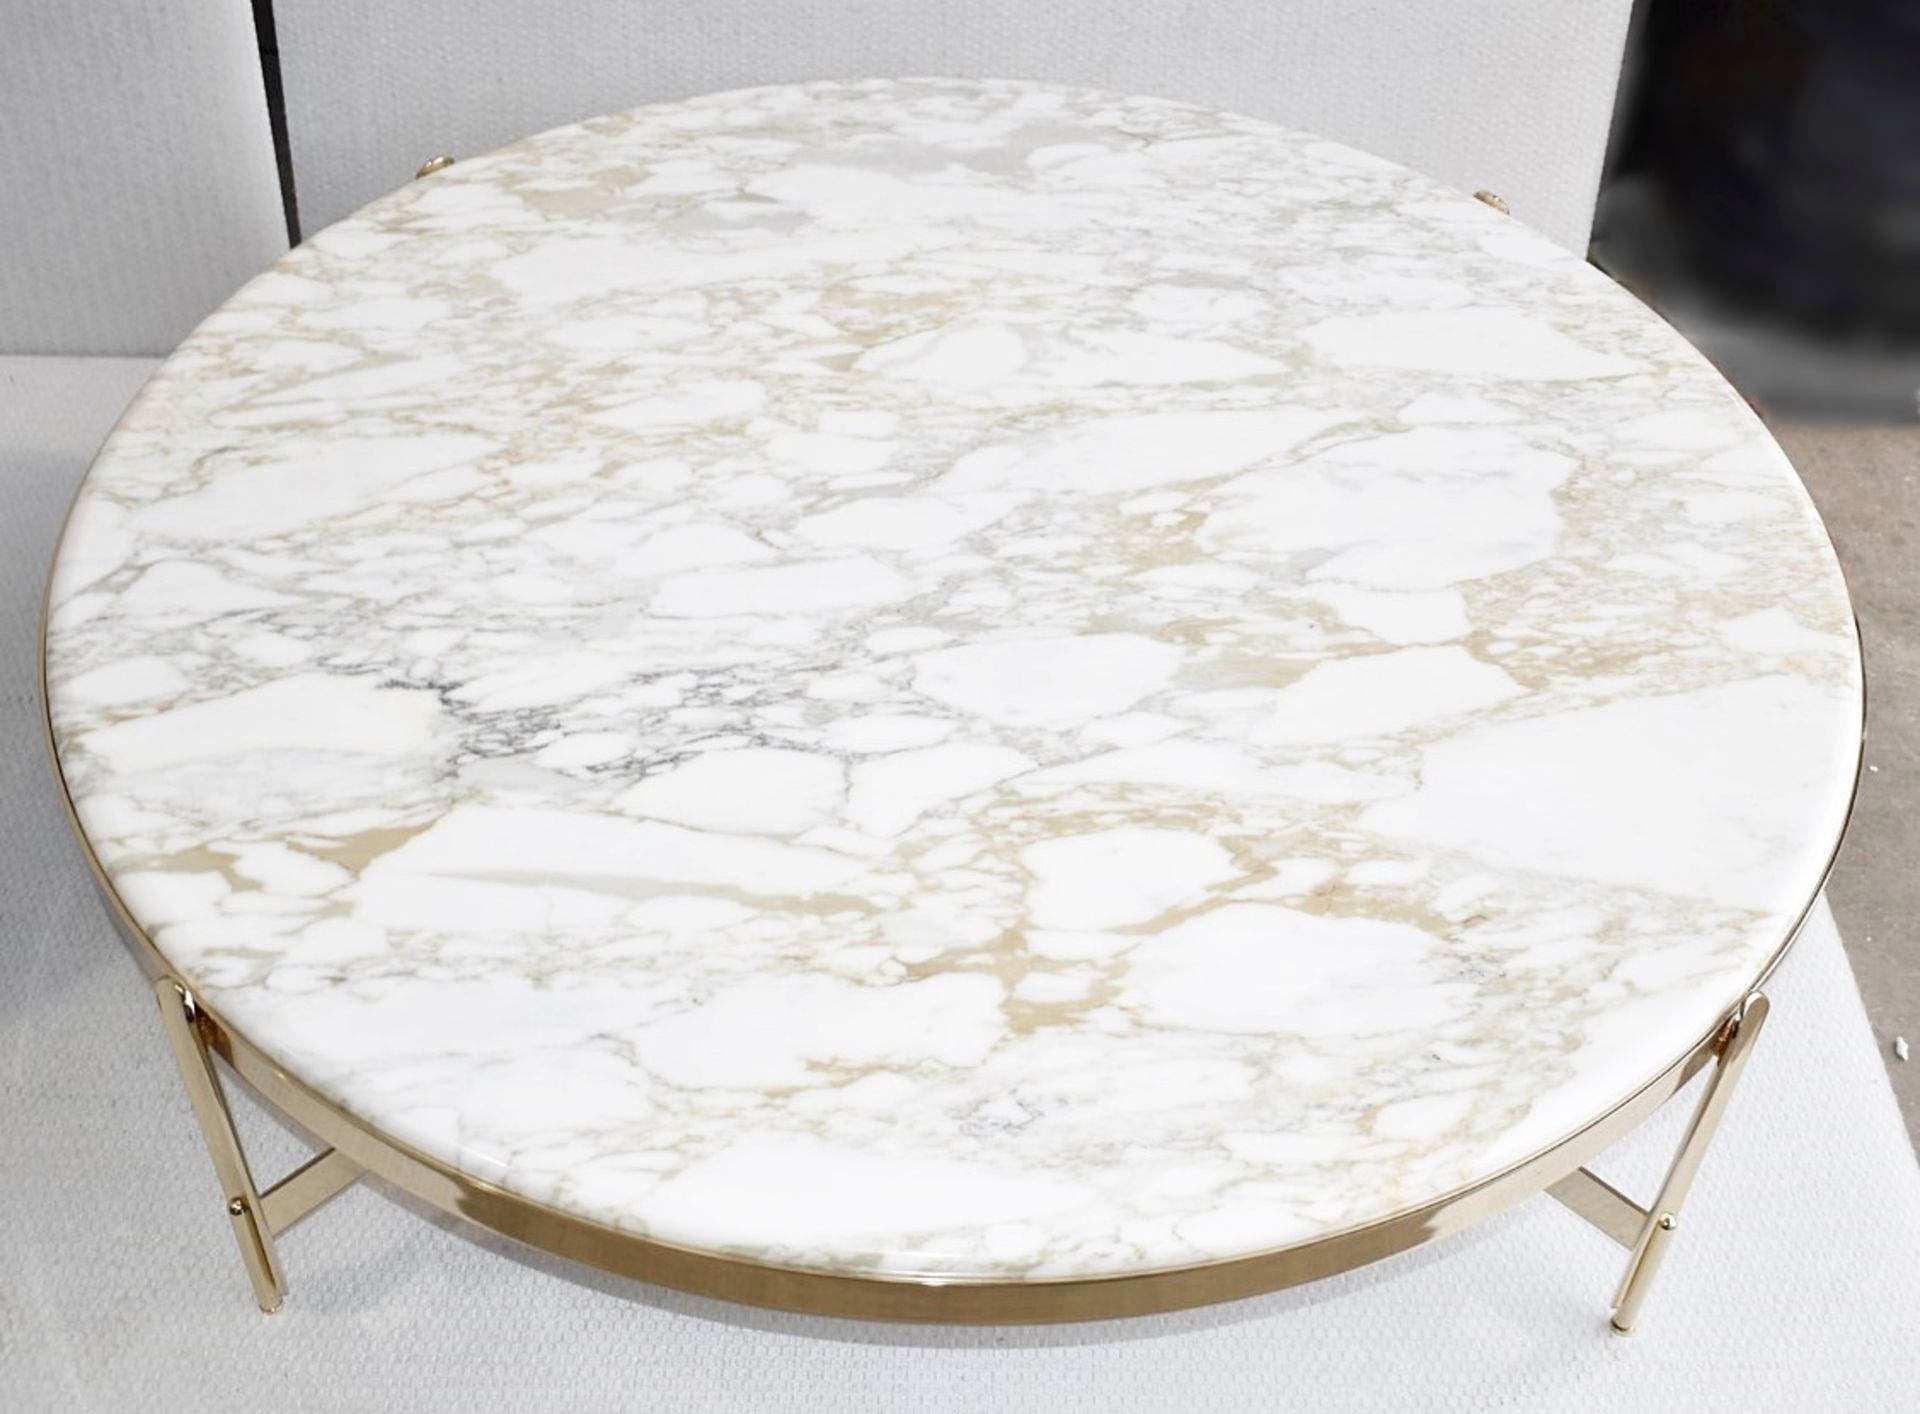 1 x ELIE SAAB MAISON 'Zenith' Luxury Italian Marble Topped Coffee Table - Original Price £6,480 - Image 3 of 6